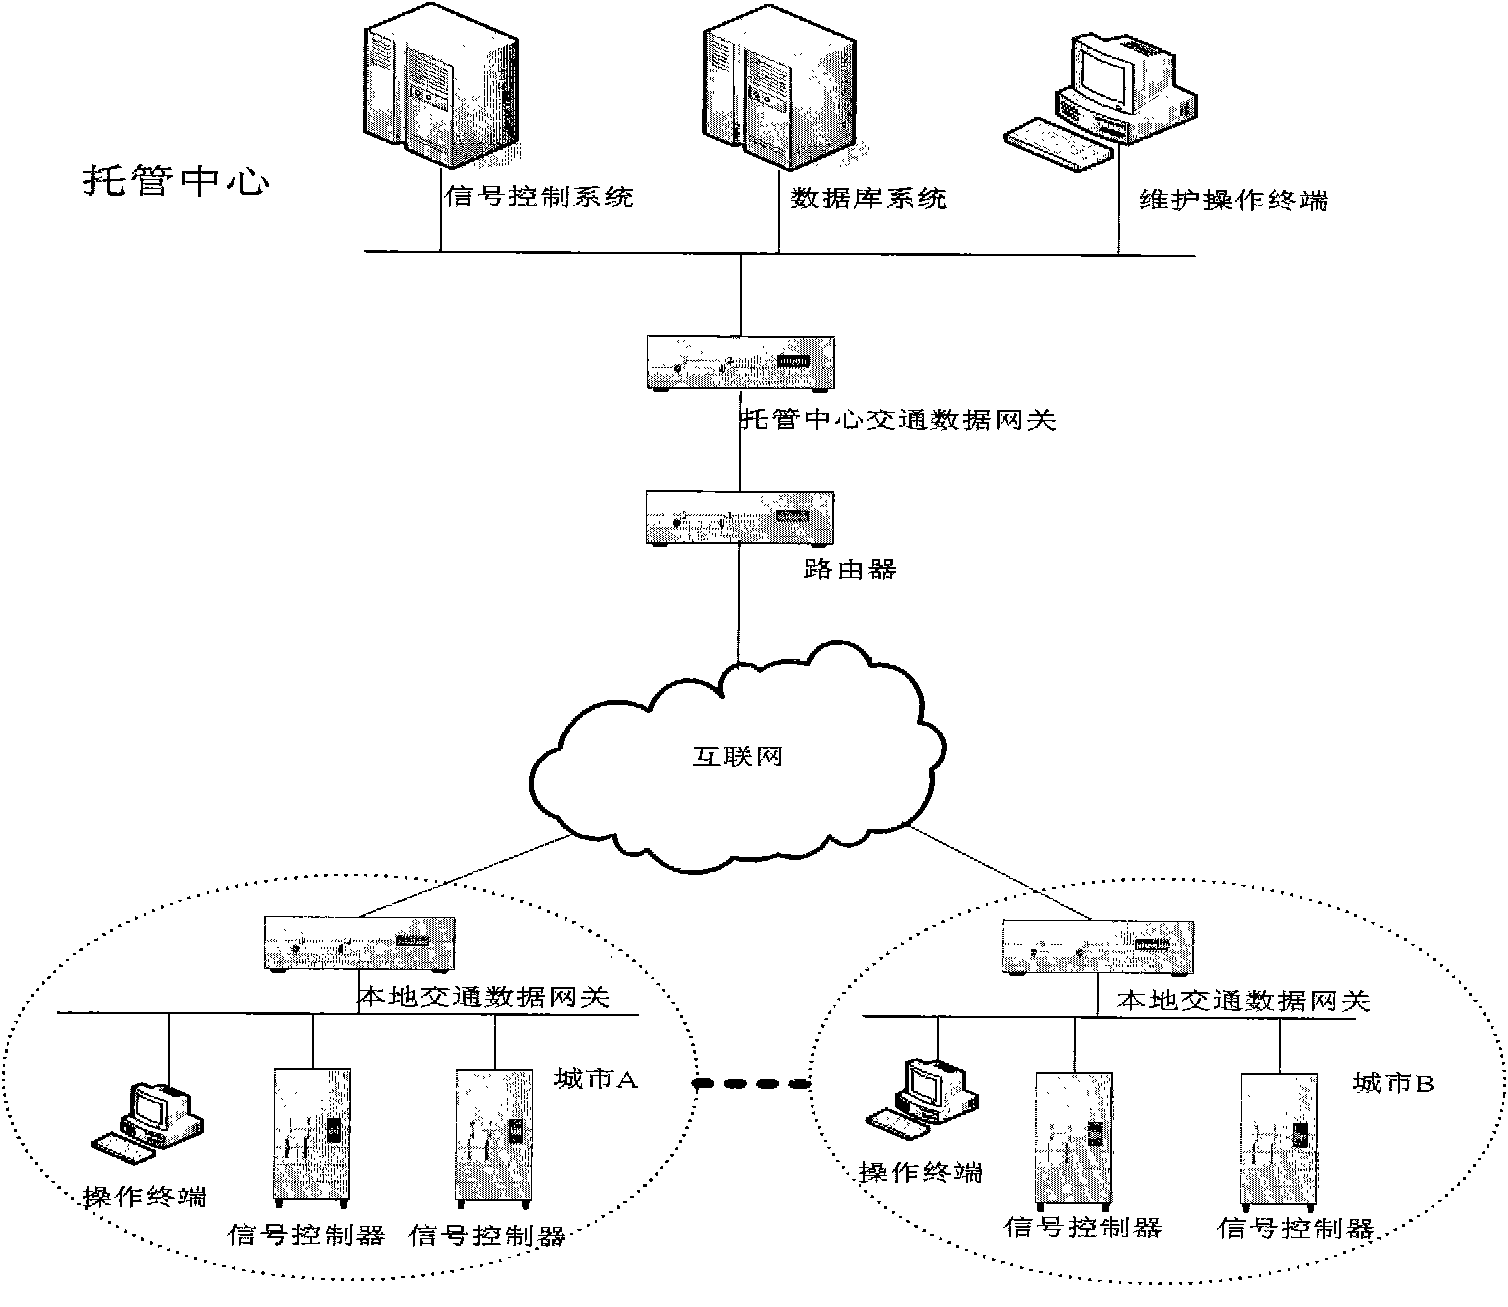 Traffic signal control system based on remote hosting